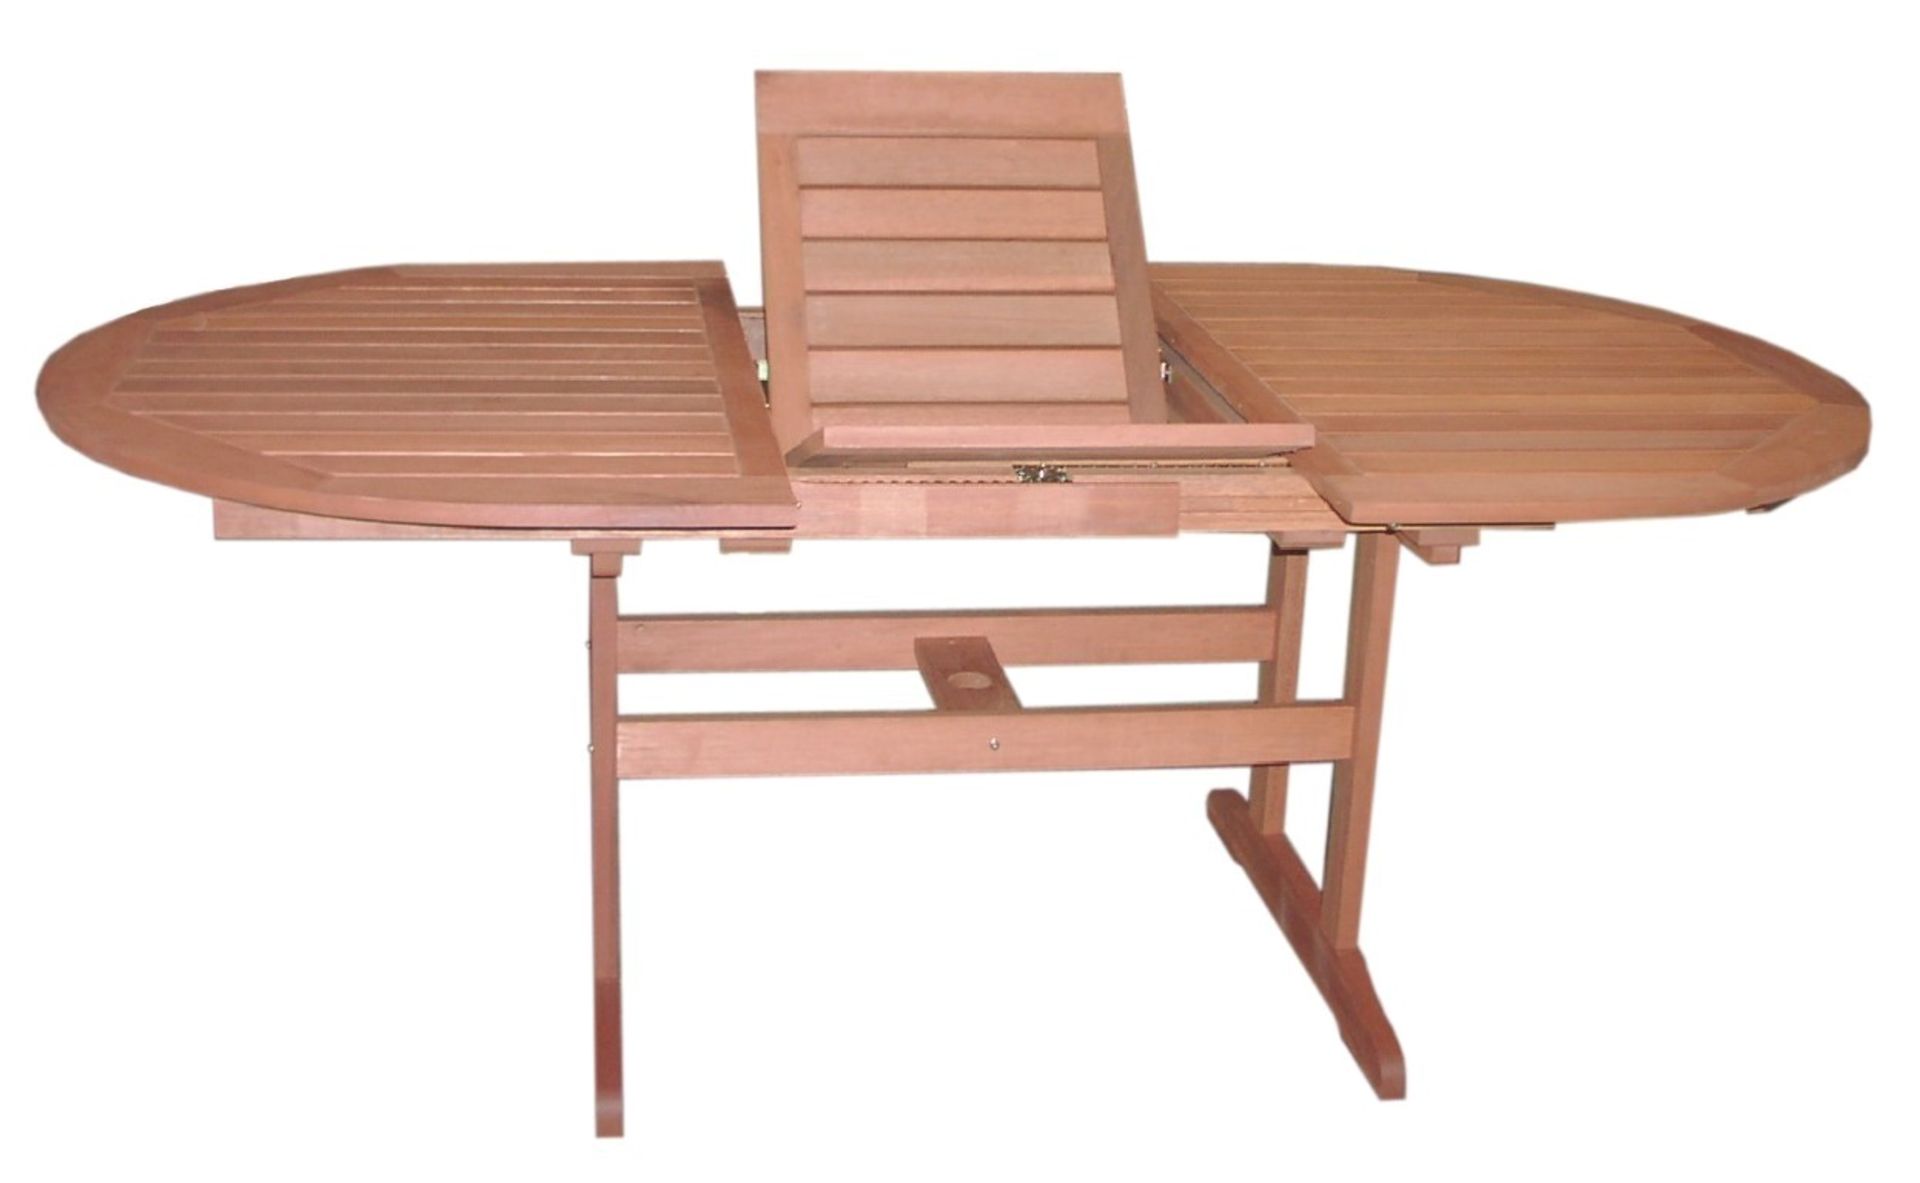 1 x 5-Piece "Macau Nassau" Garden Furniture Set - Includes Bench, Extending Table & 3 x Arm Chairs - - Image 5 of 9